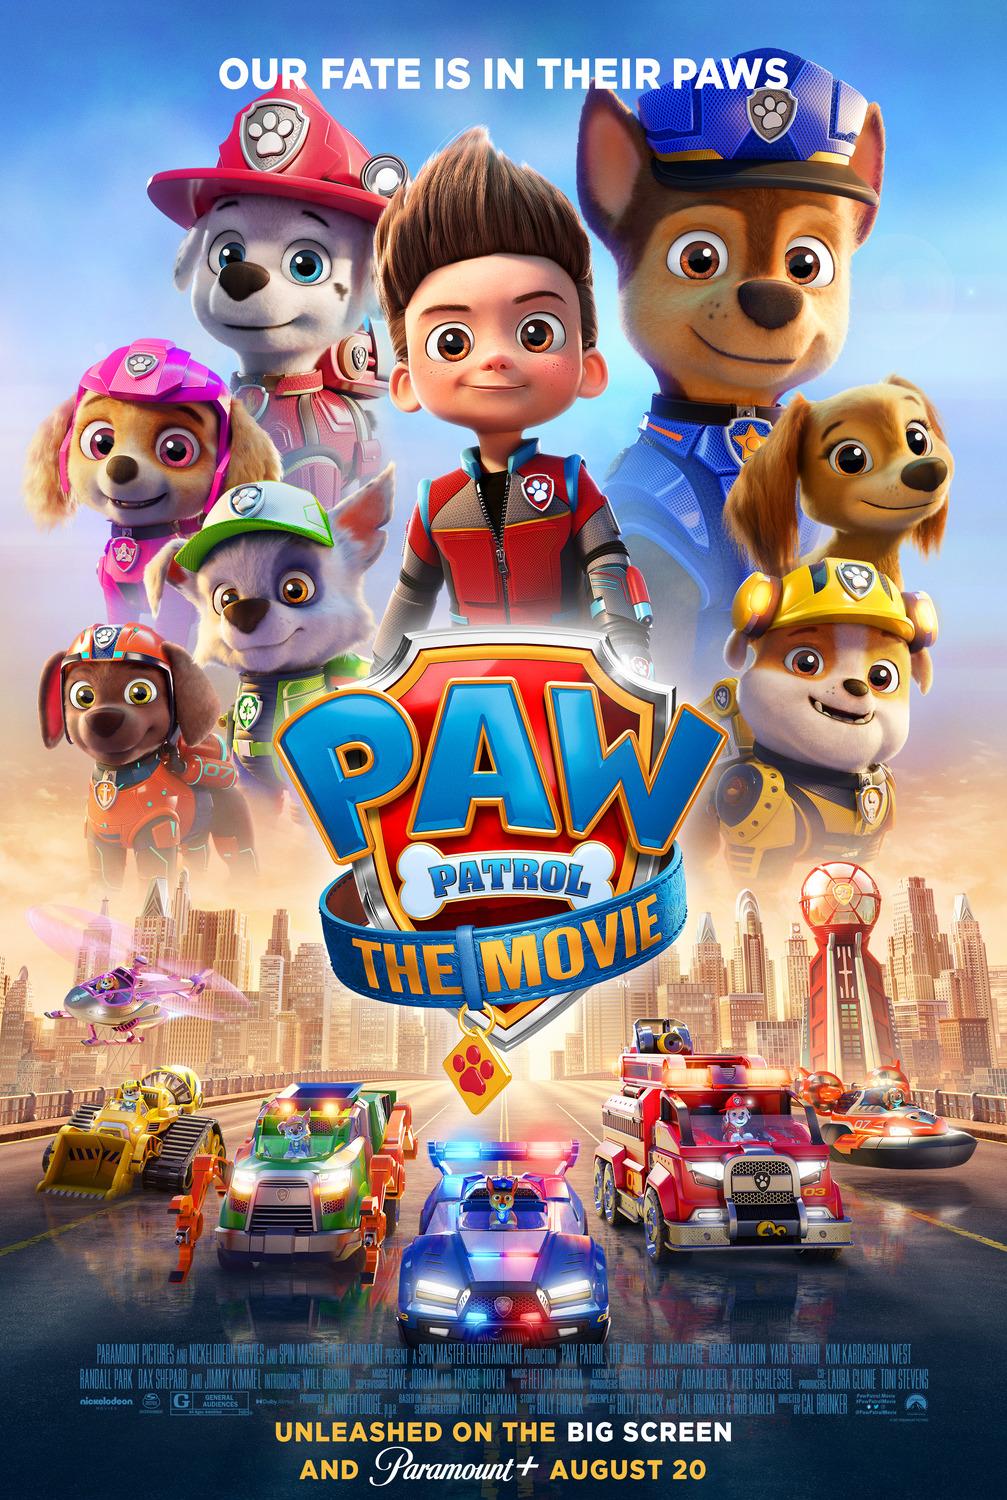 PAW Patrol: The Movie movie posters and image